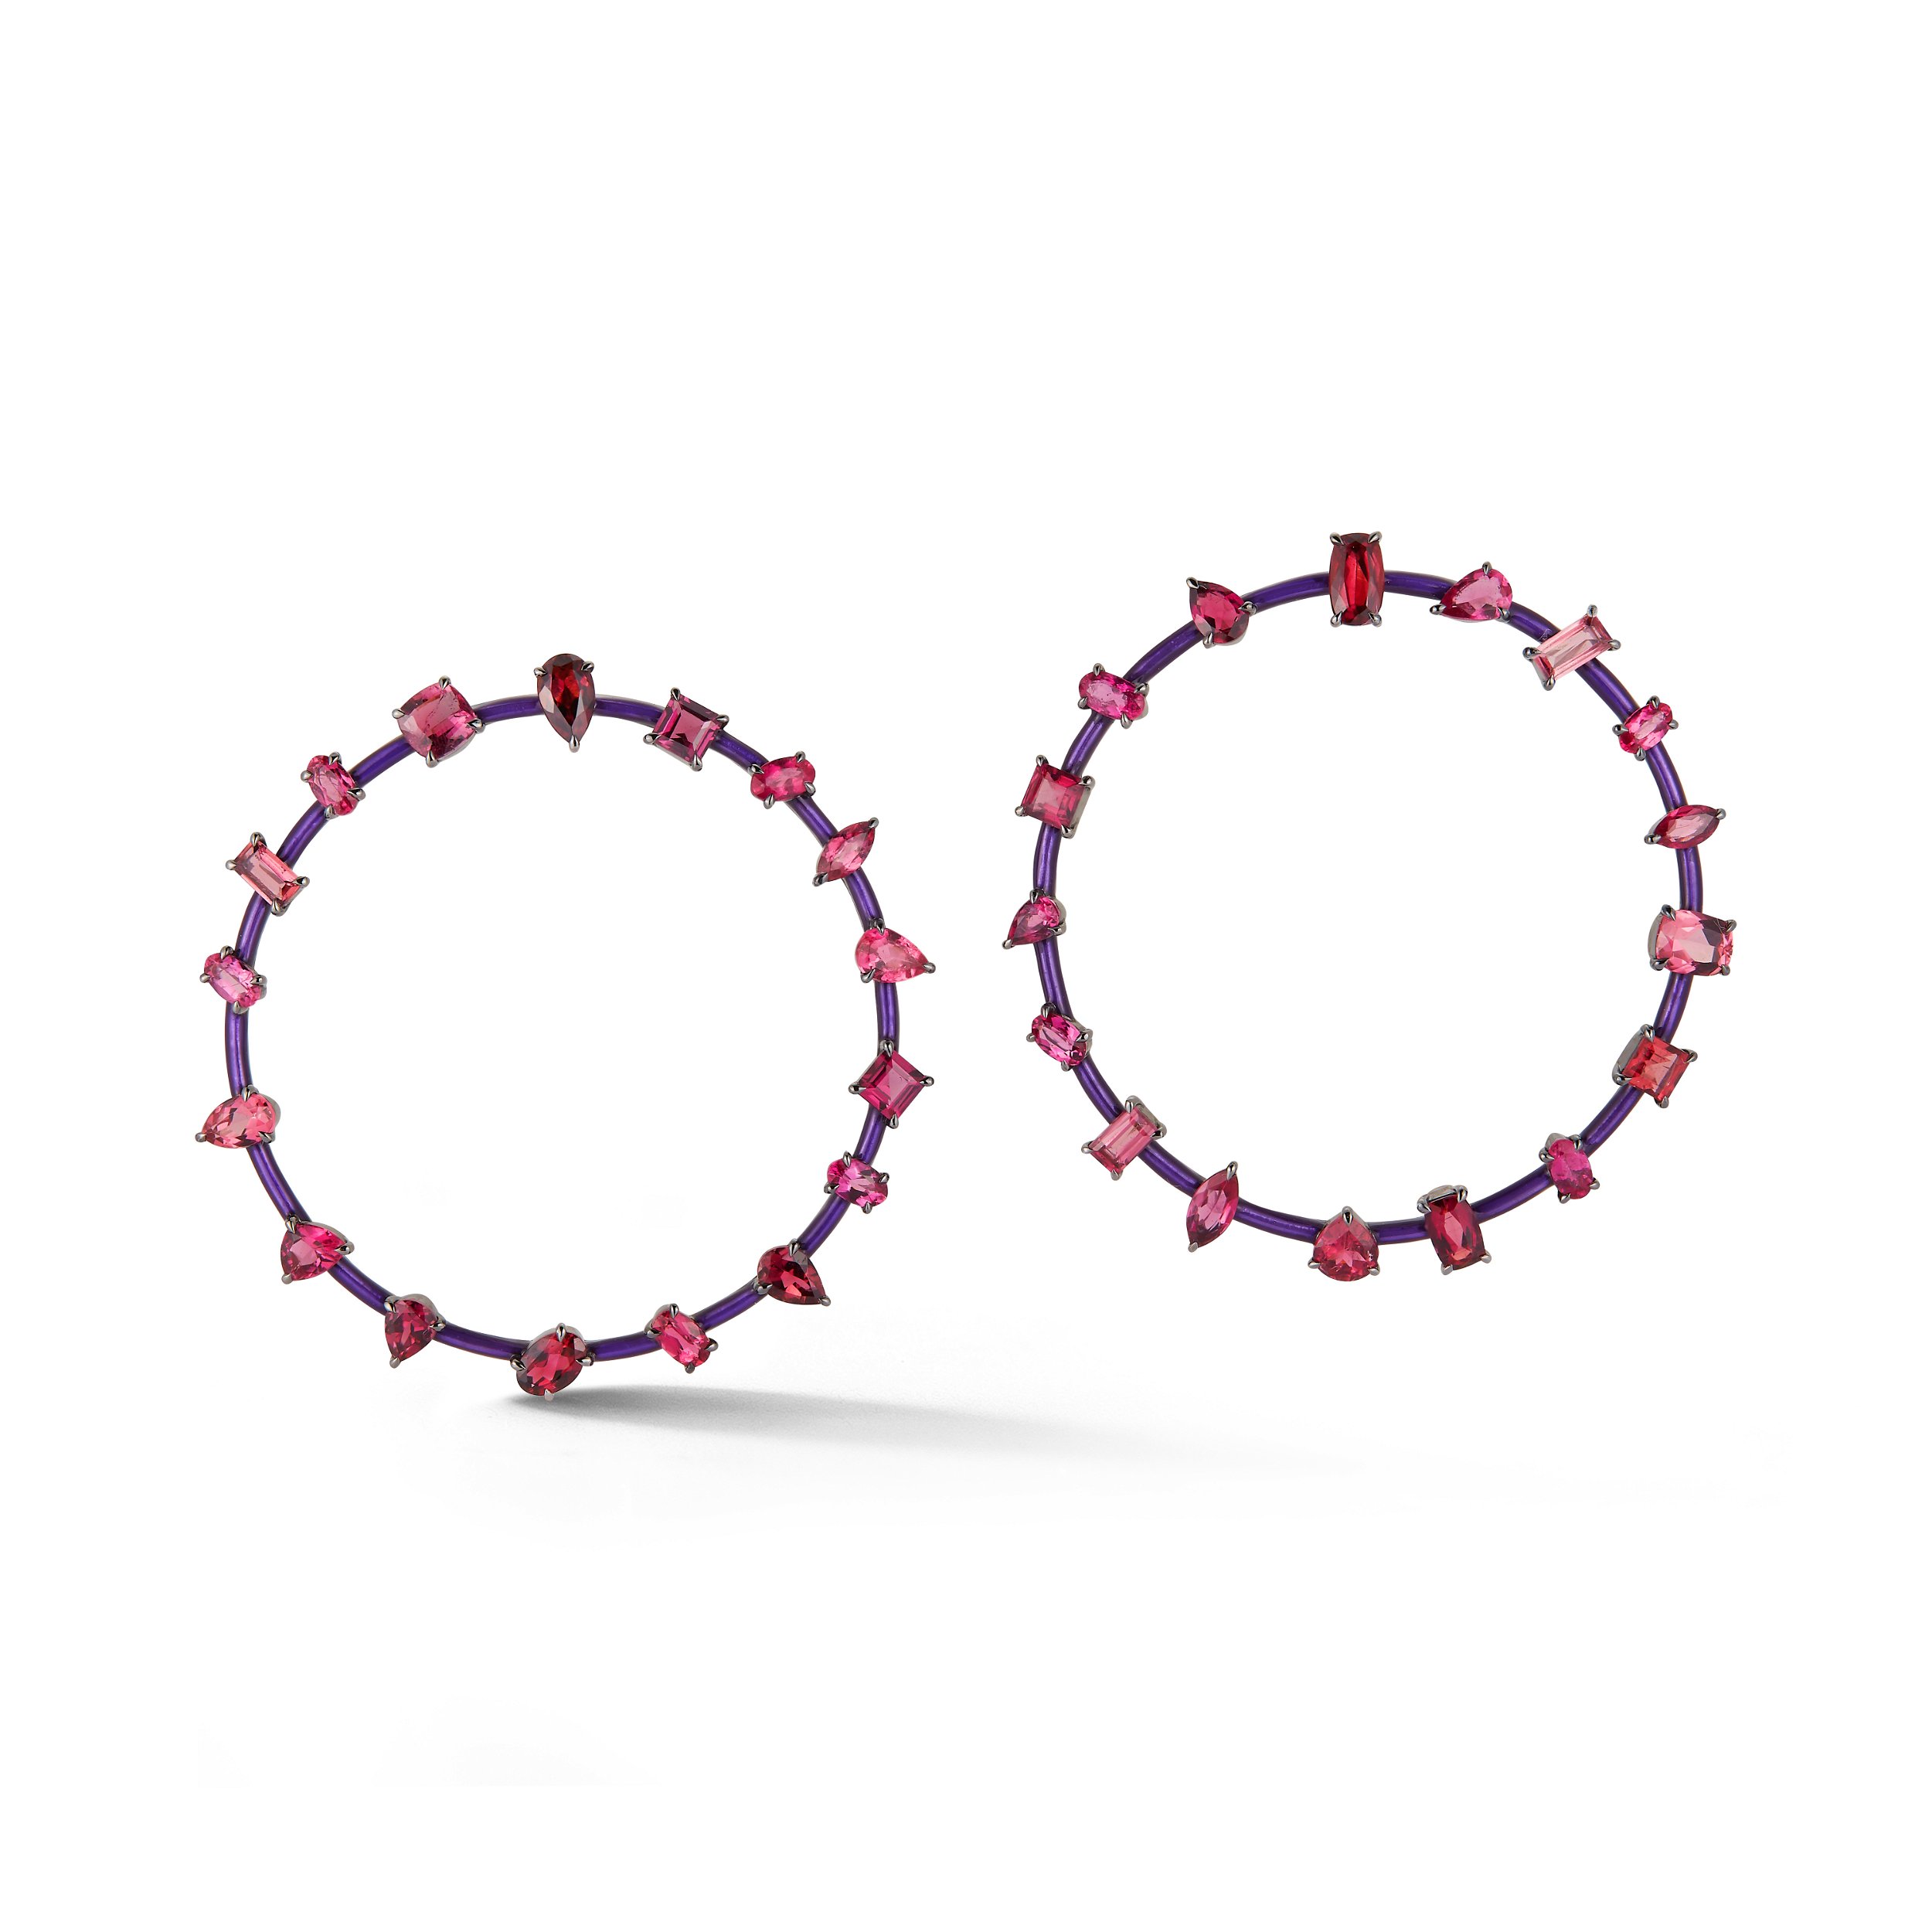 50mm Orbit Hoop Earrings with Pink Tourmaline in 18kt White Gold and Purple Enamel